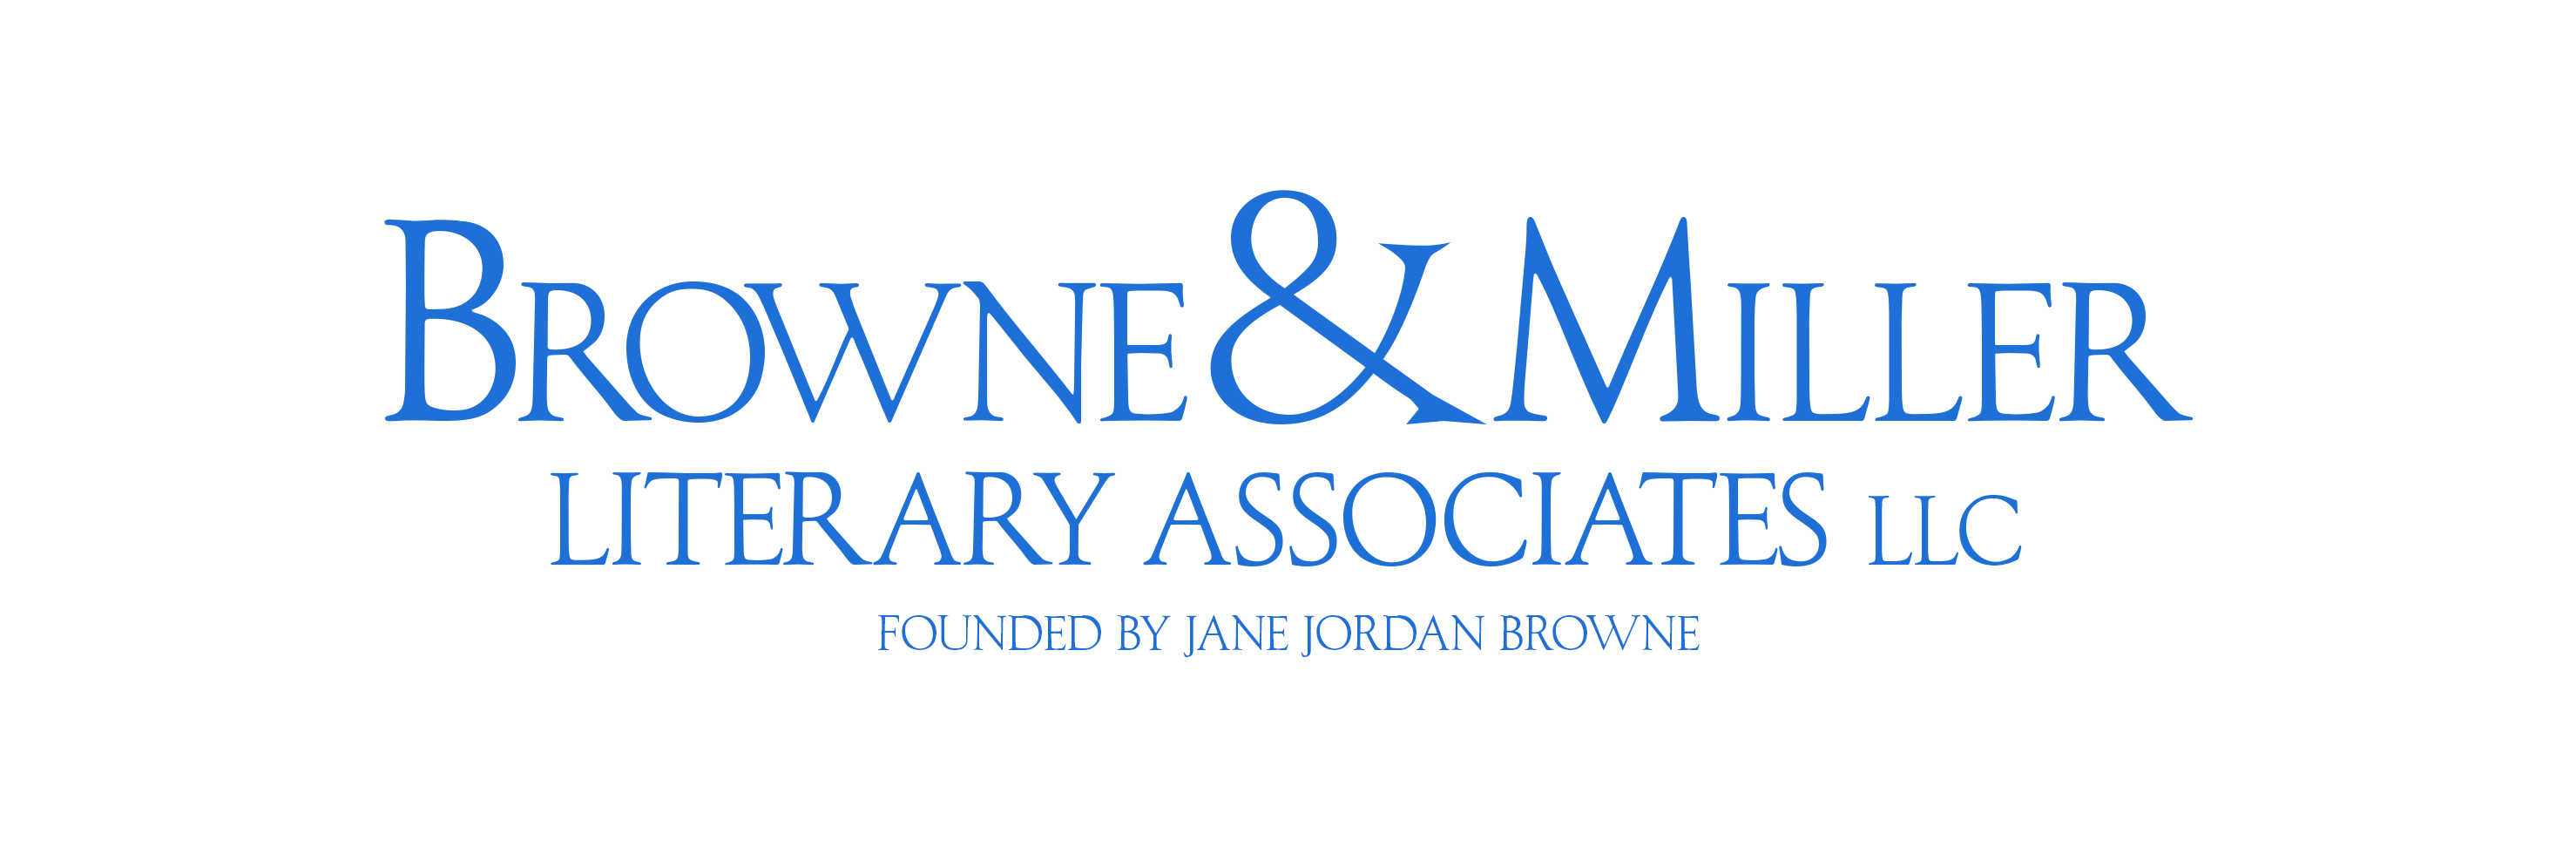 Browne & Miller Literary Associates